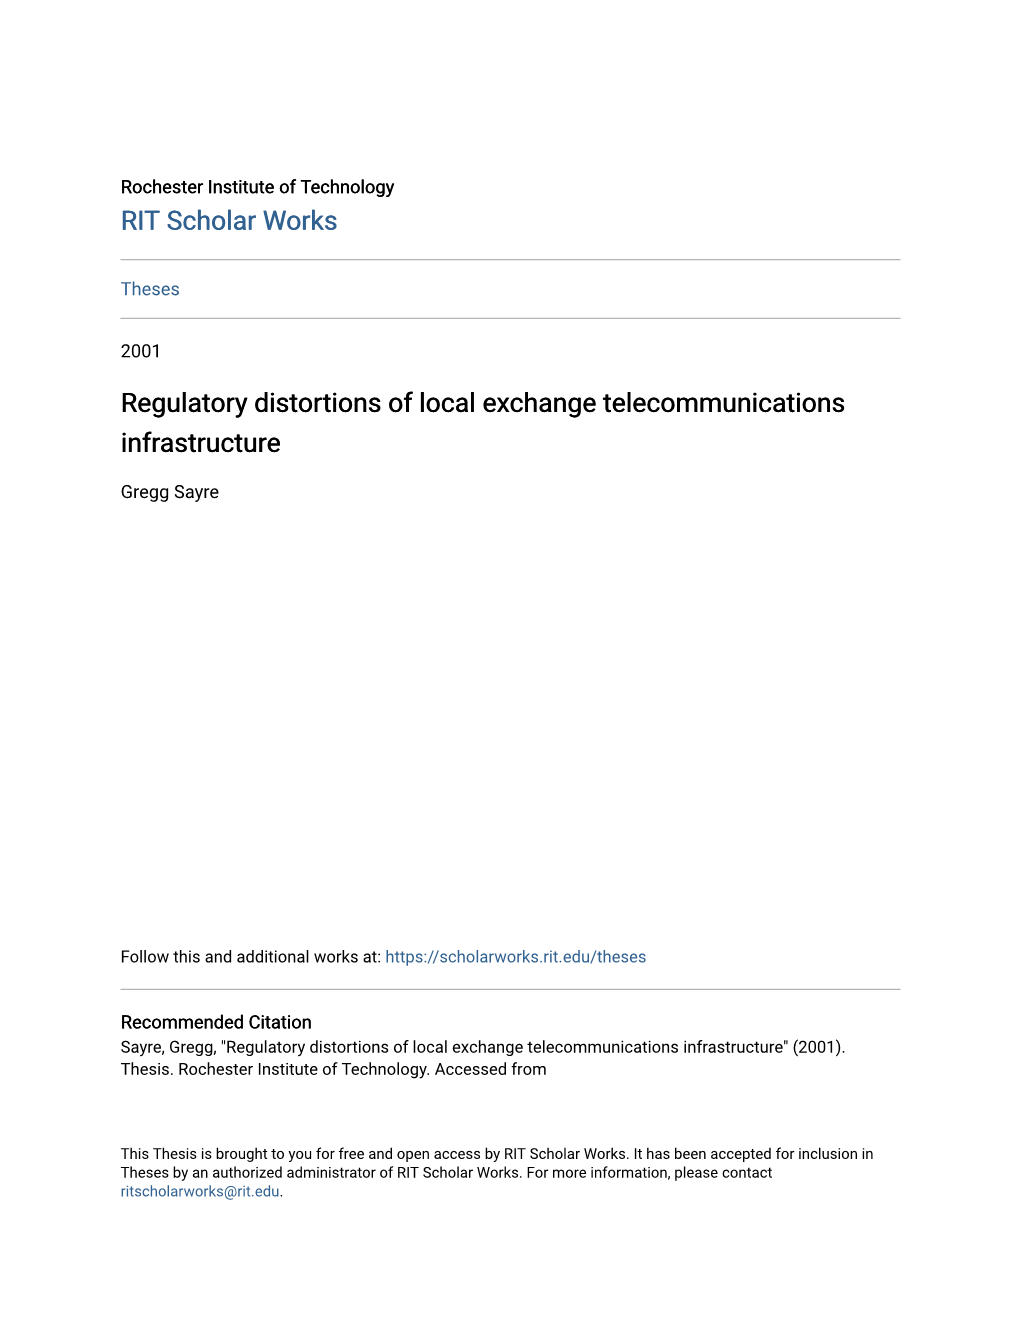 Regulatory Distortions of Local Exchange Telecommunications Infrastructure